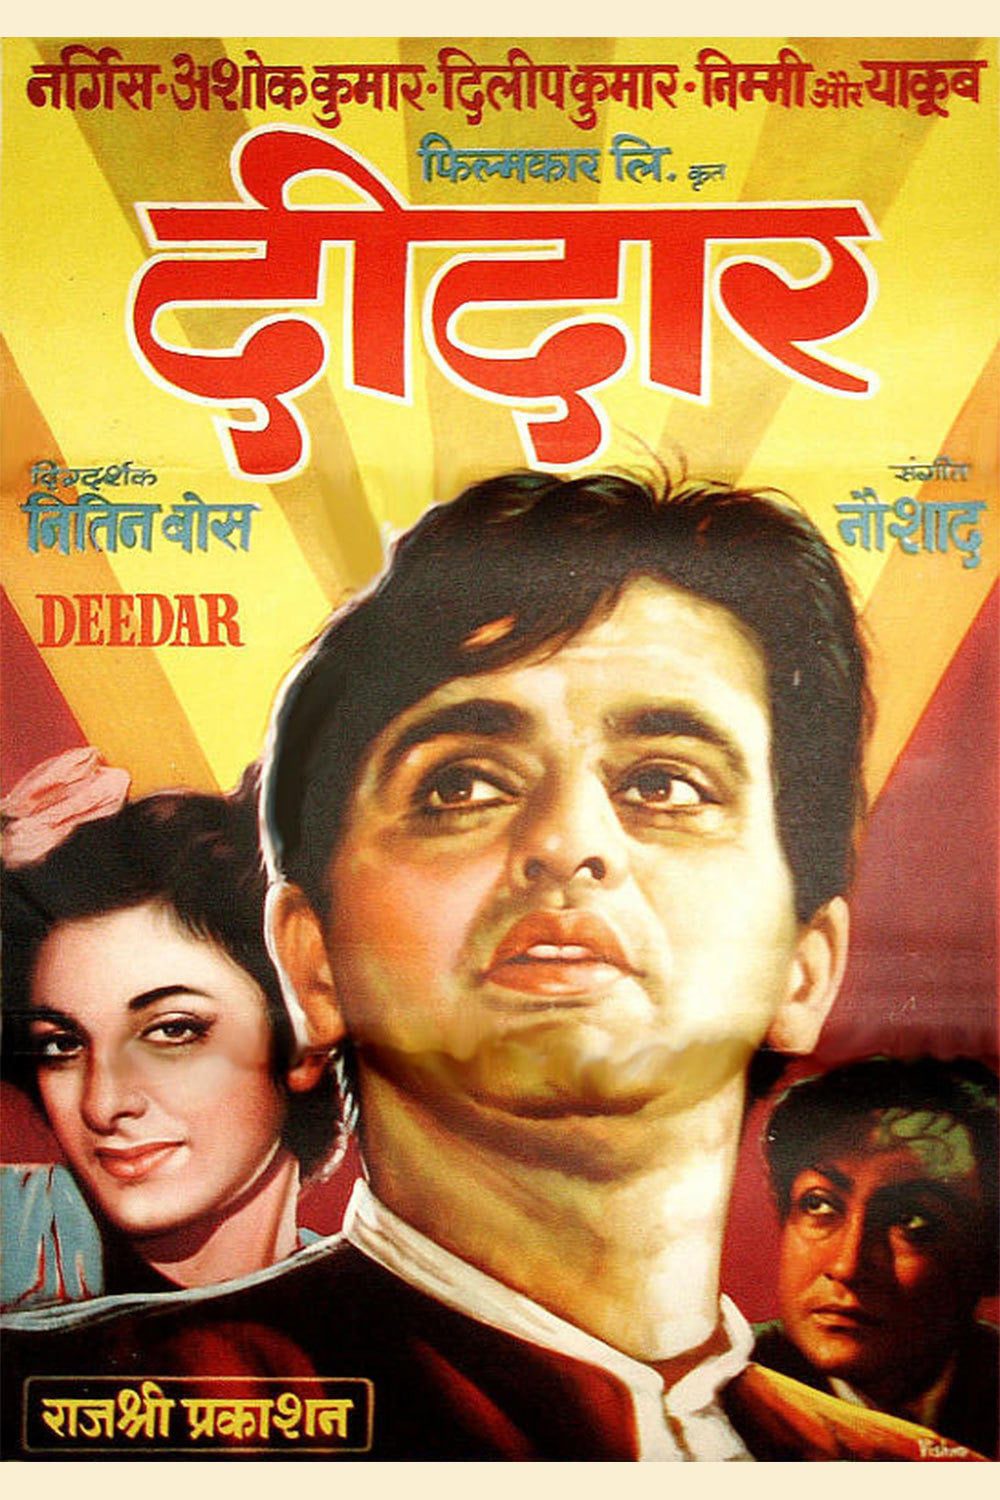 Poster for the movie "Deedar"